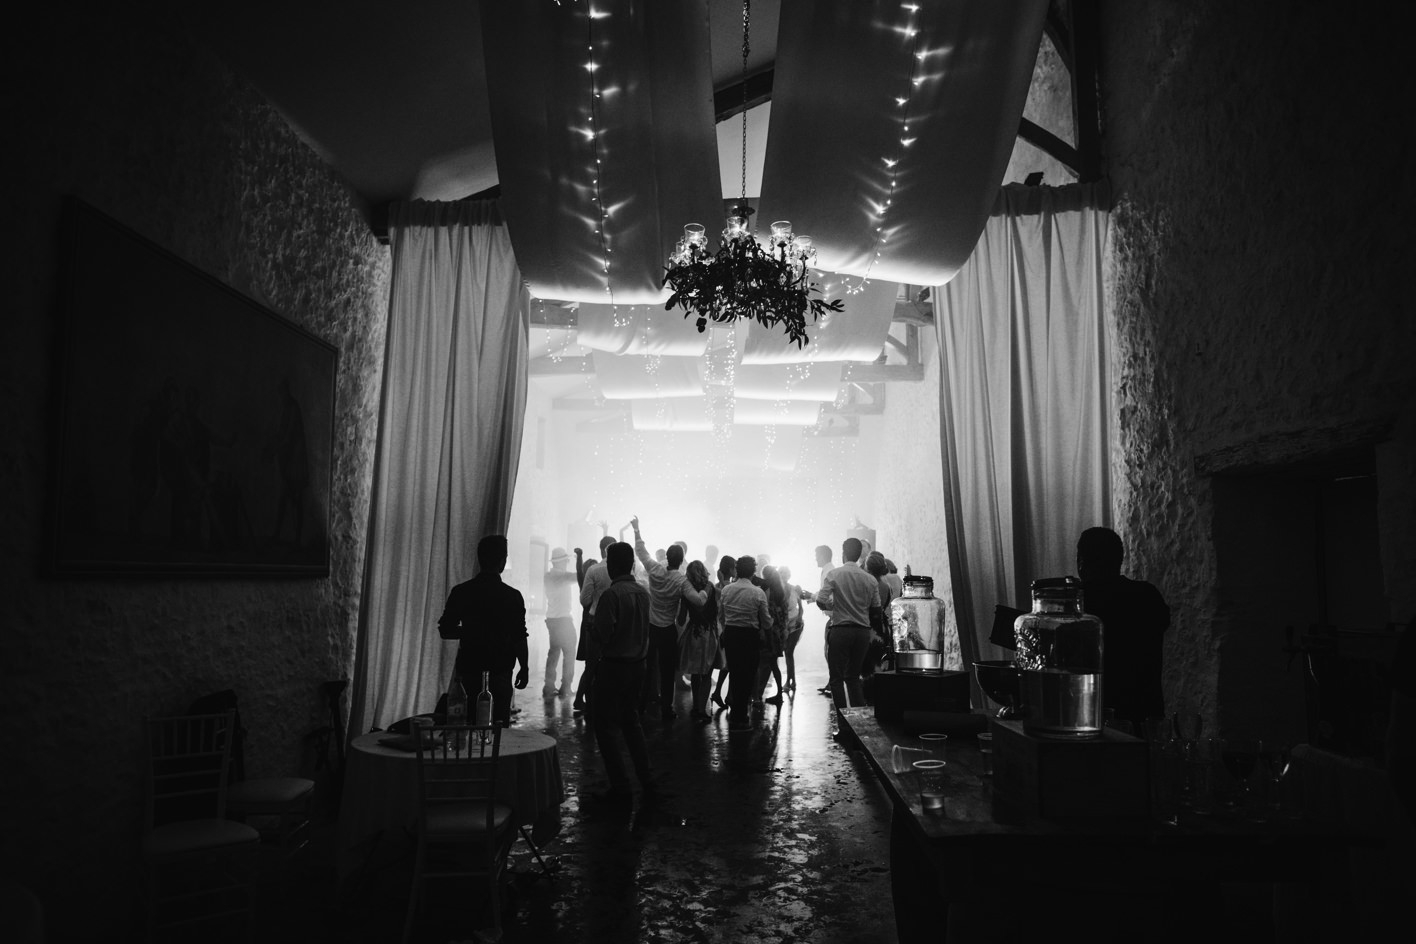 guests dancing as lighting creates moody atmosphere at wedding in France